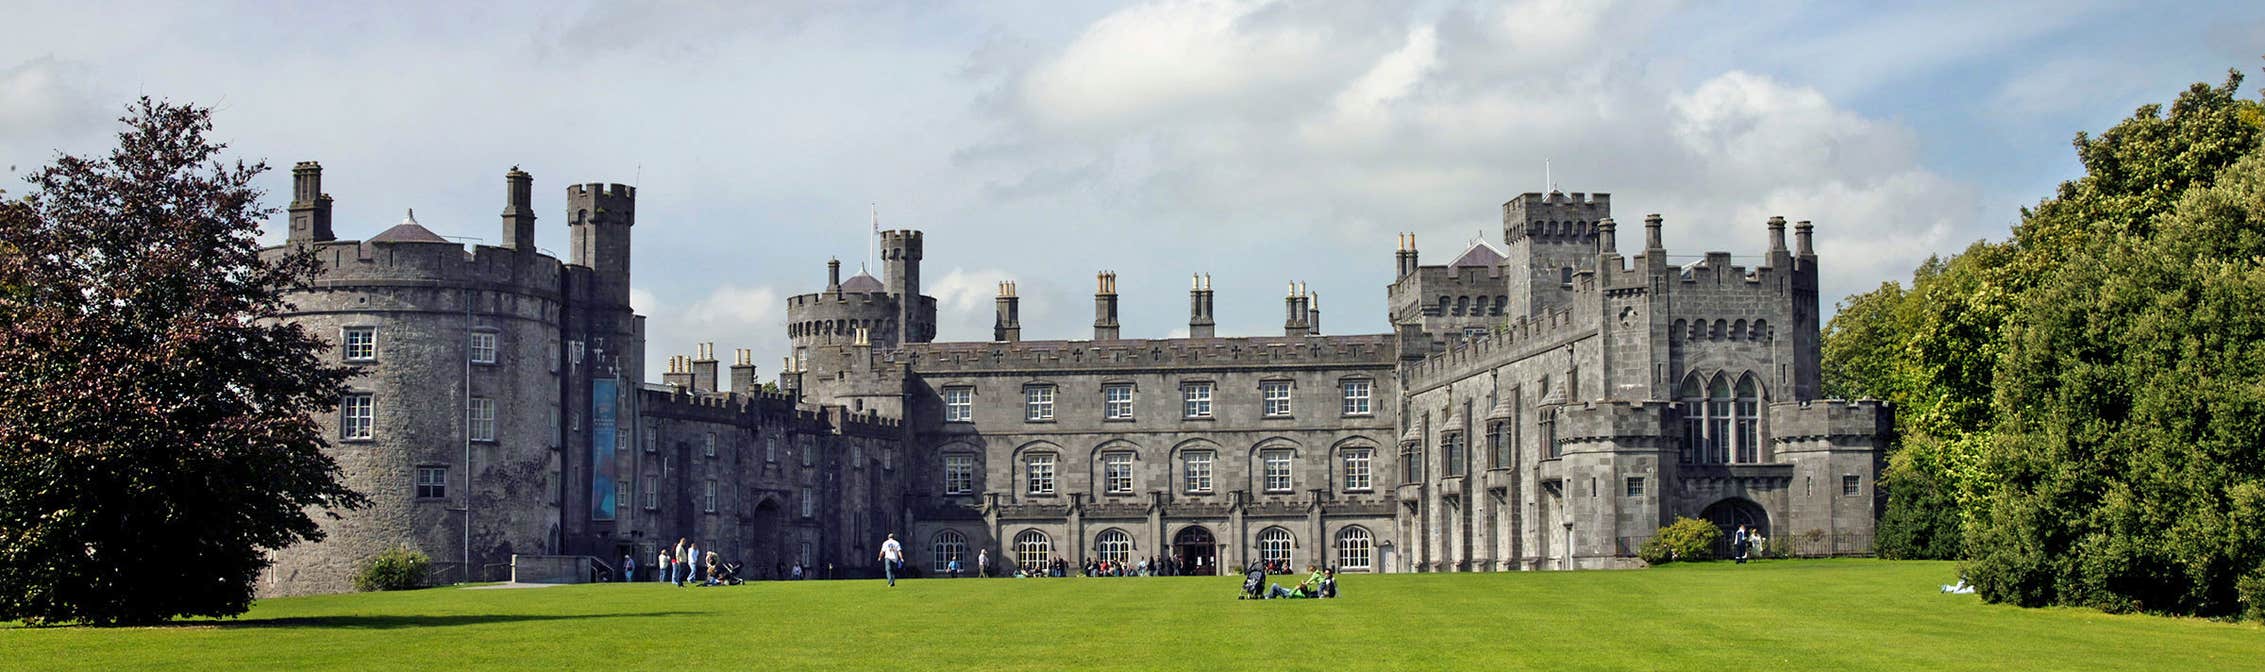 Image of Kilkenny Castle, Kilkenny City